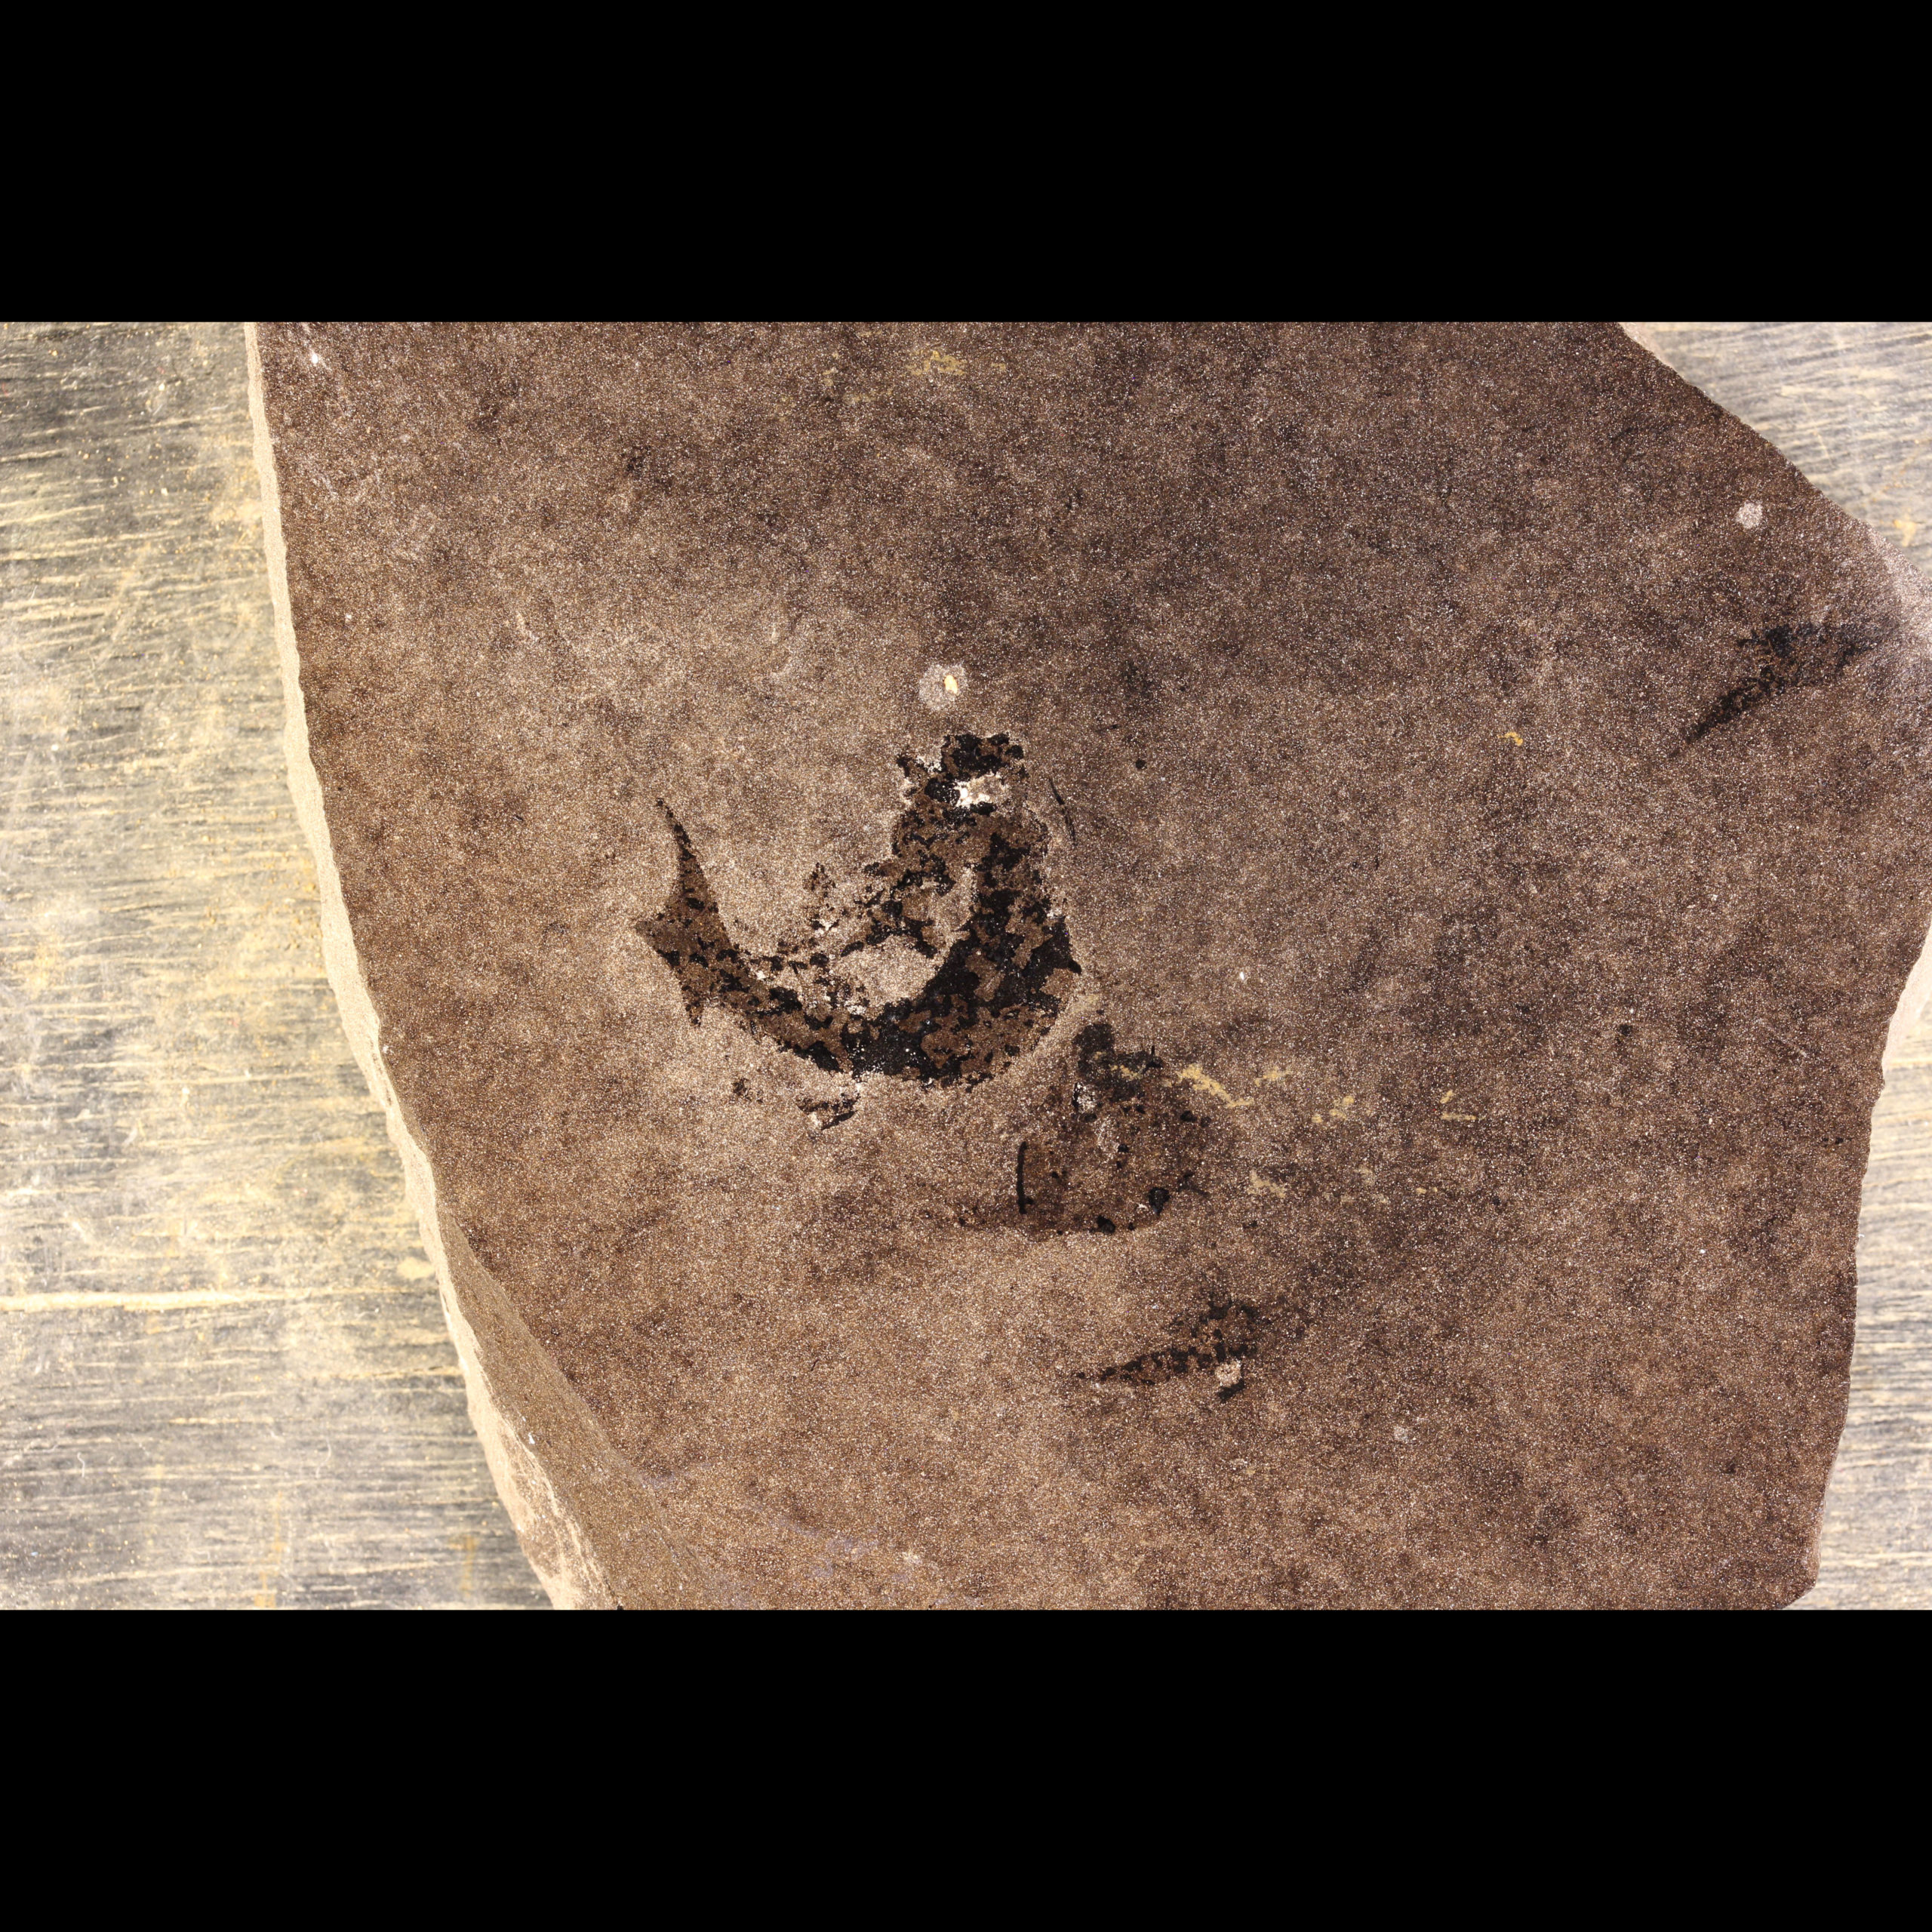 shark fossil mesacanthus pusillus